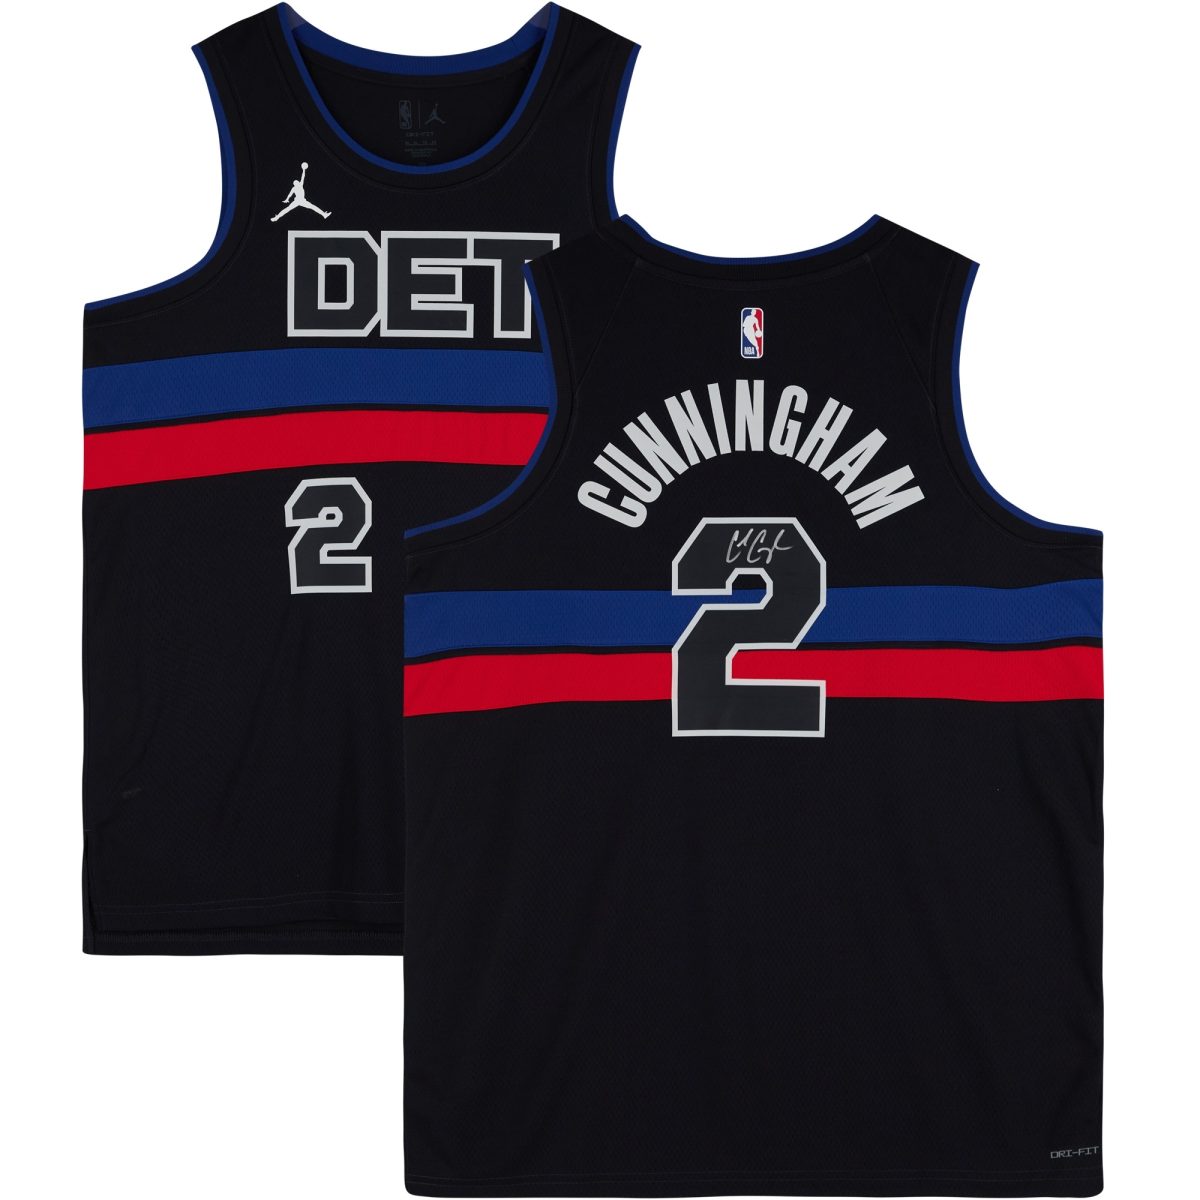 Cade Cunningham Detroit Pistons Autographed Black Jordan Brand Statement Swingman Jersey